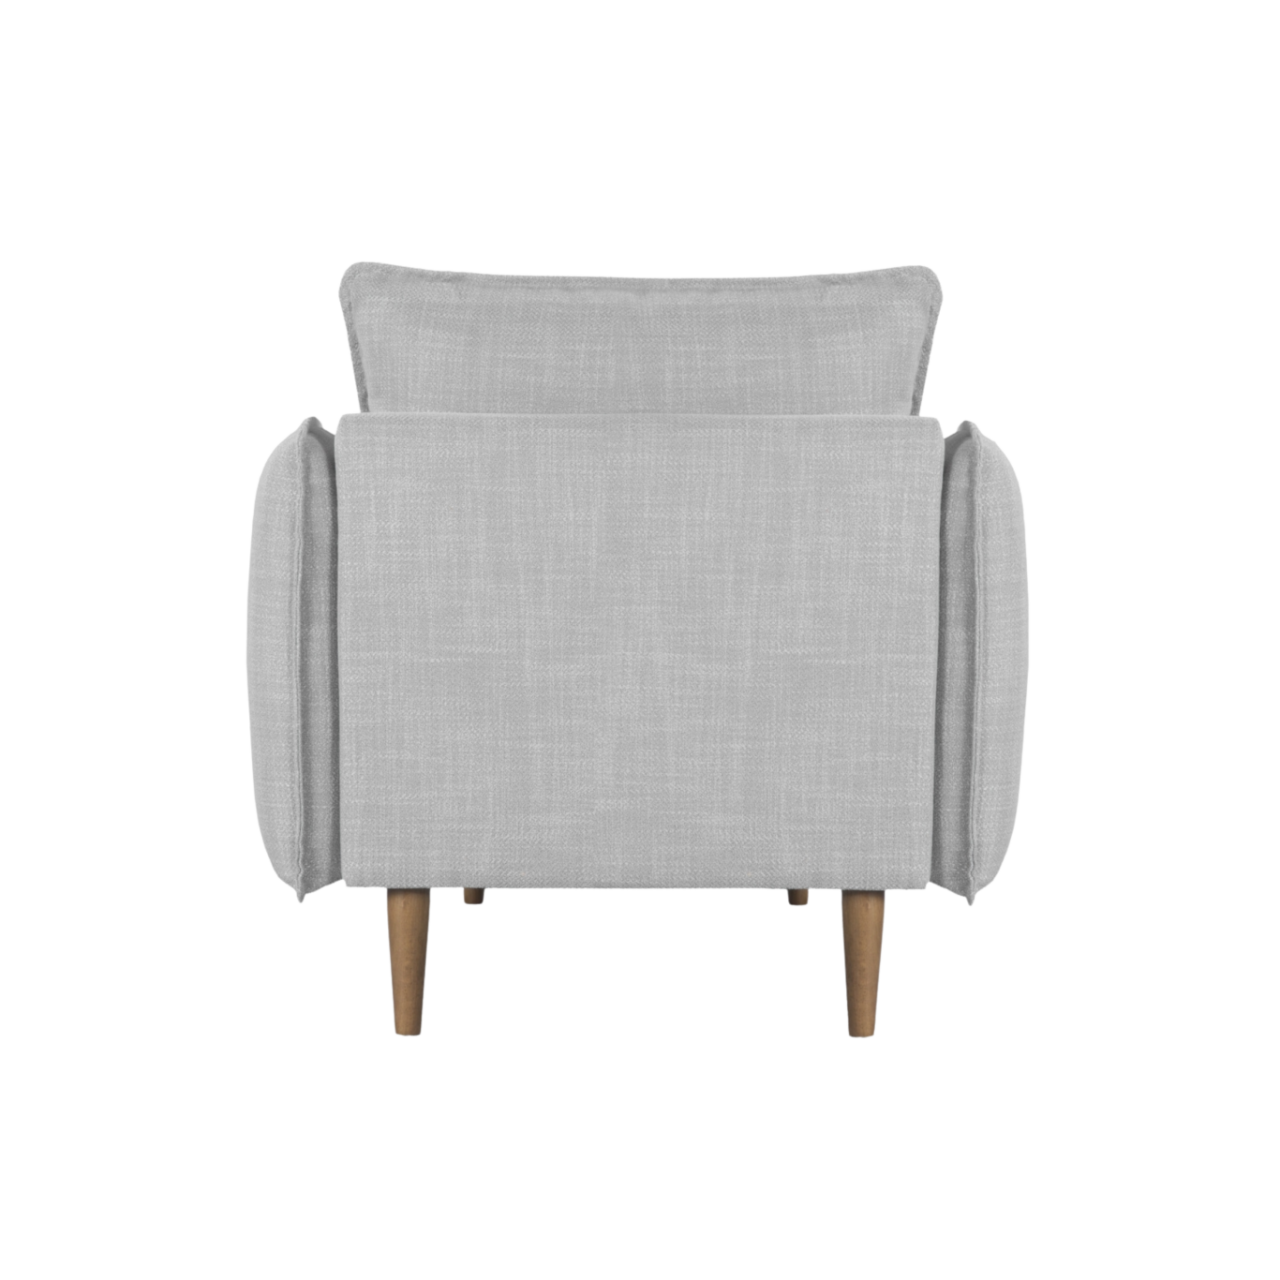 back view of modern designer armchair in grey linen upholstery